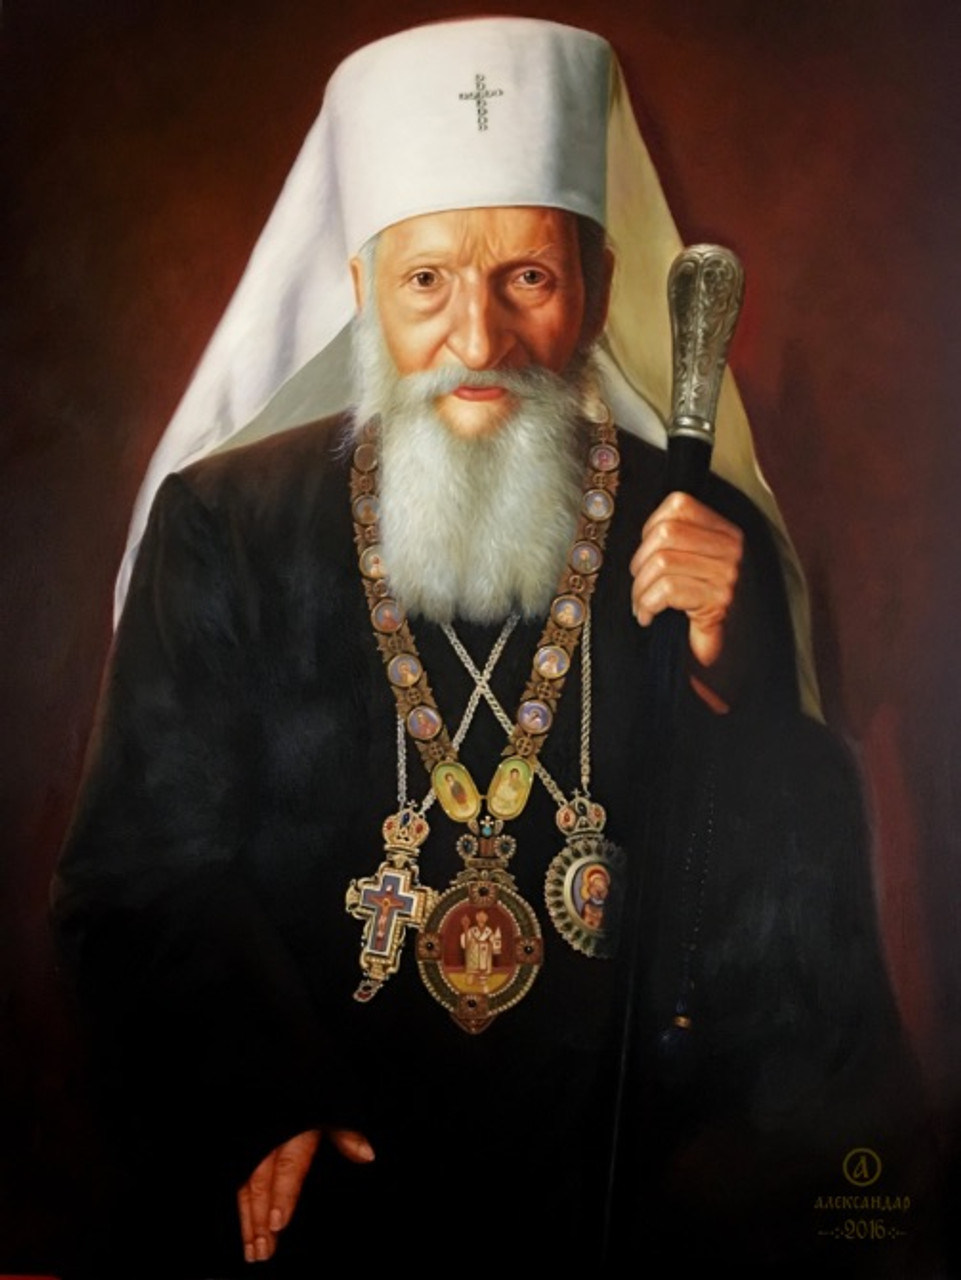 Patriarch +Pavle Image II - OrthodoxGifts.com